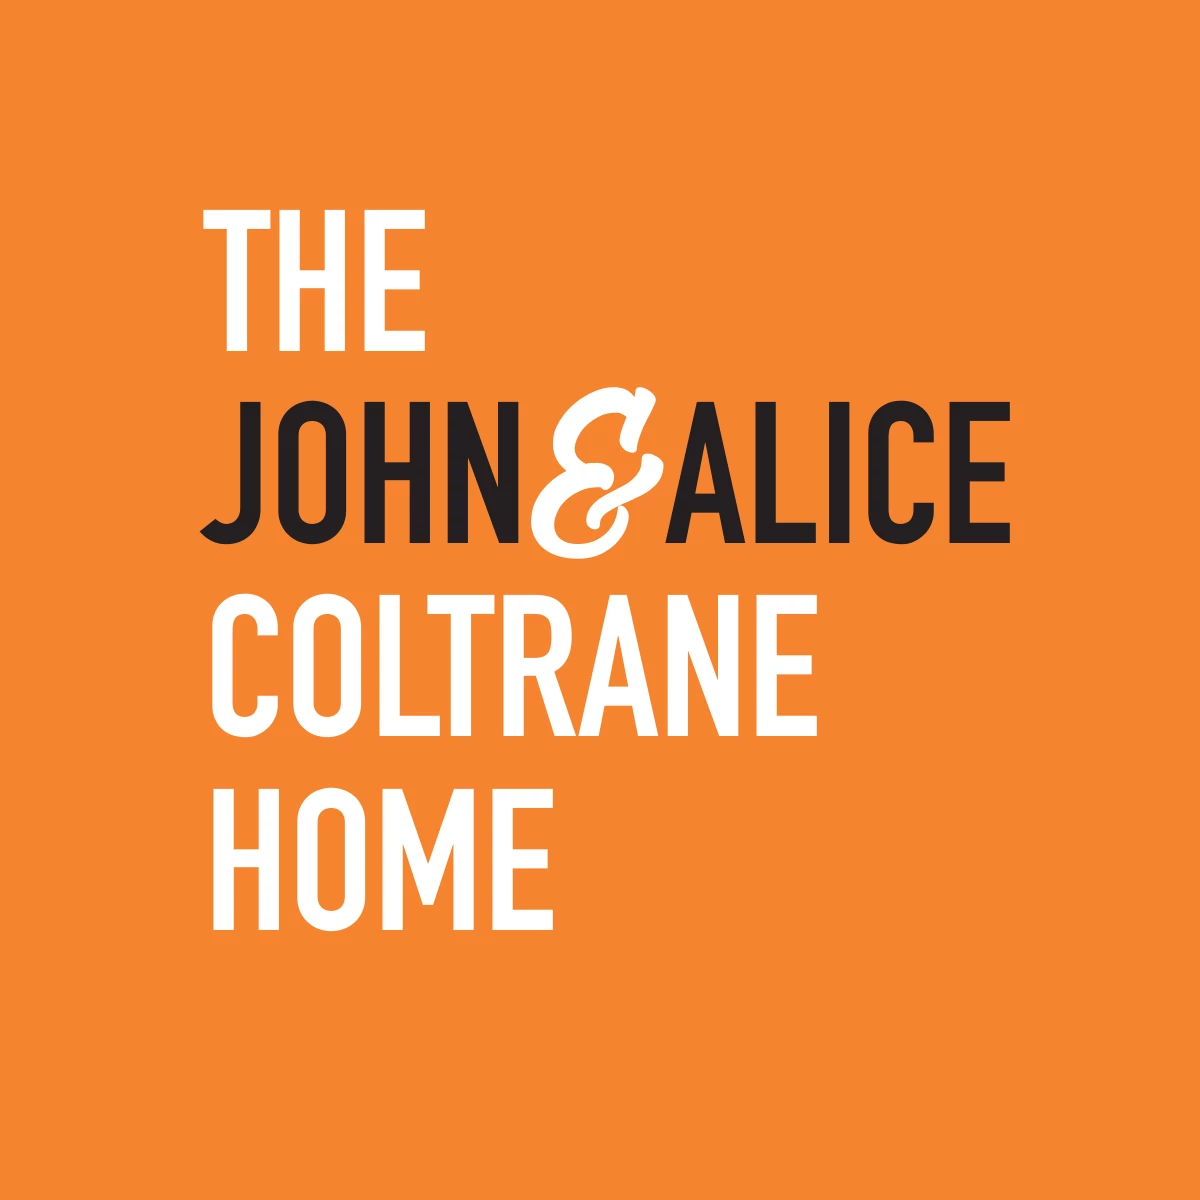 The John & Alice Coltrane home logo.